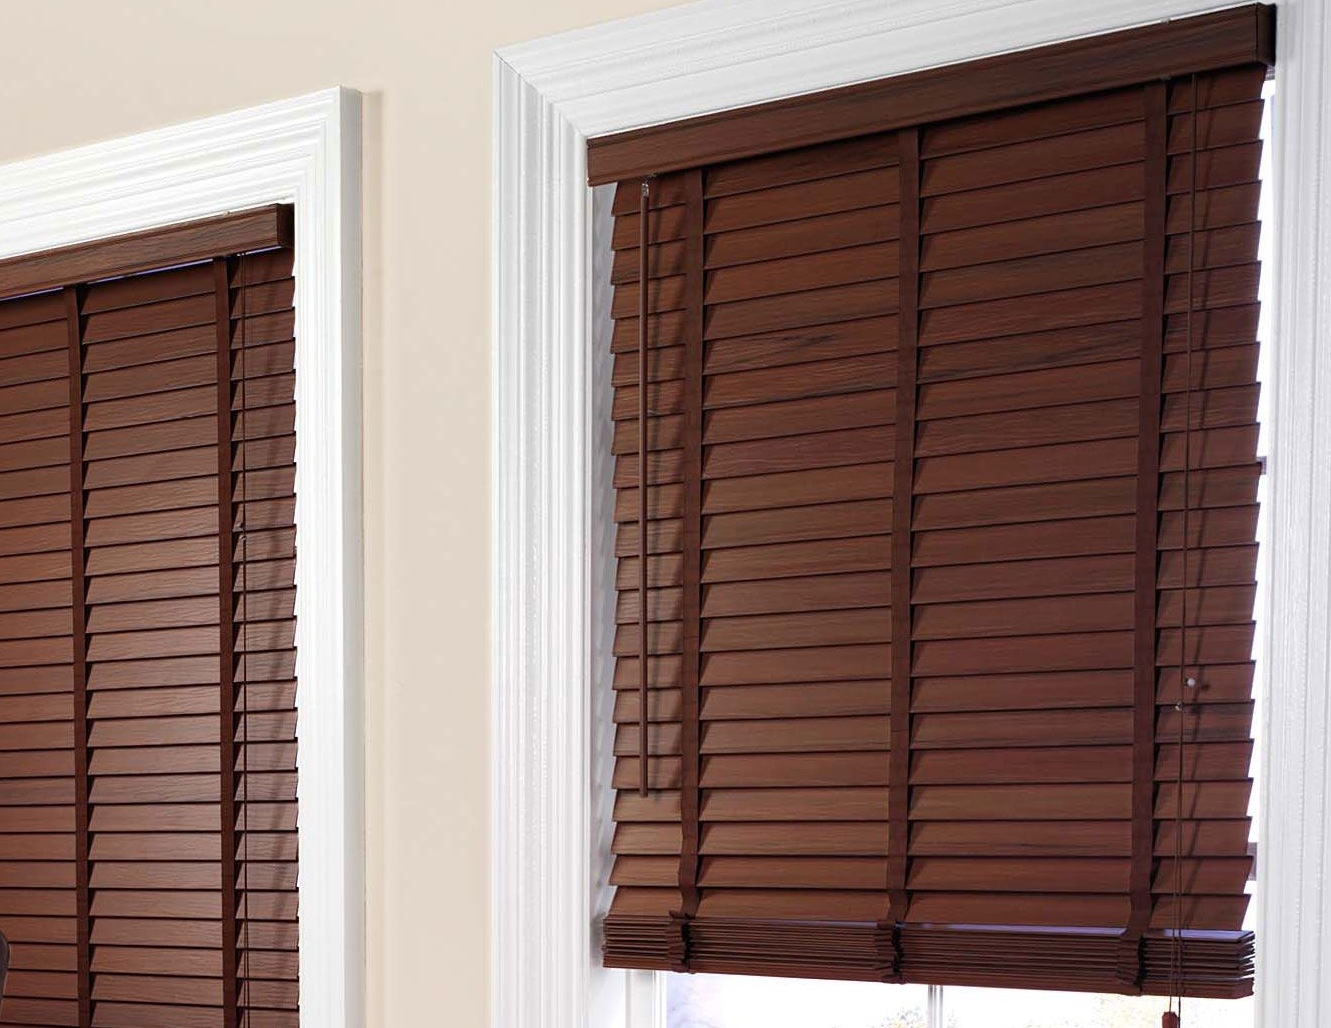 Details about   New Wood Grain Wood Effect Venetian Blind Office Home Window Blinds Drop 150cm 